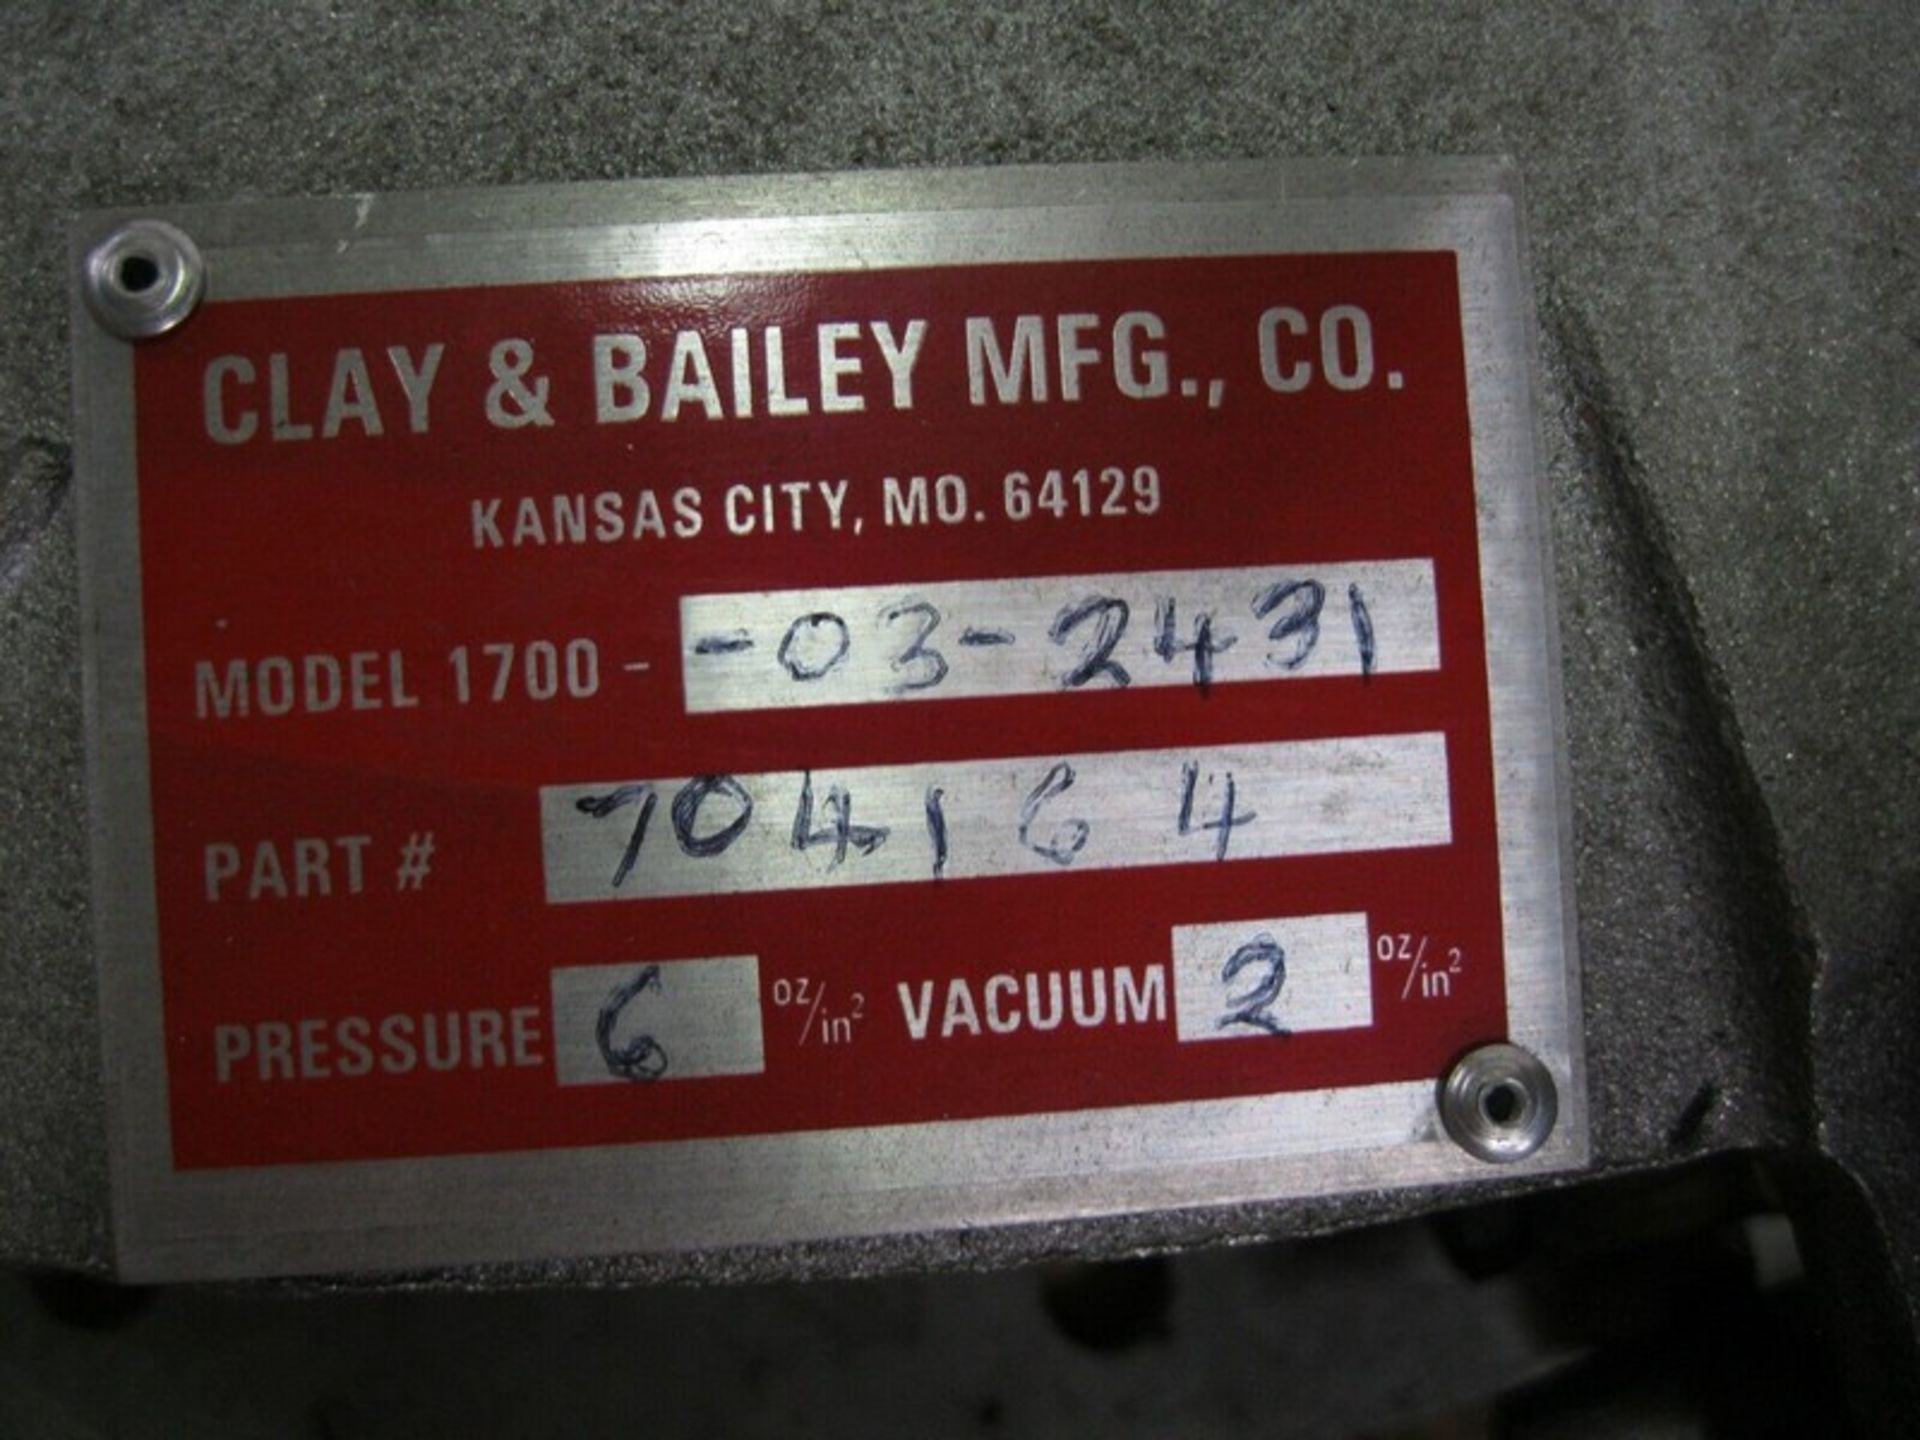 Clay & Bailey 1700-03-2431 Pressure/Vacuum Manhole NEW - Image 4 of 5